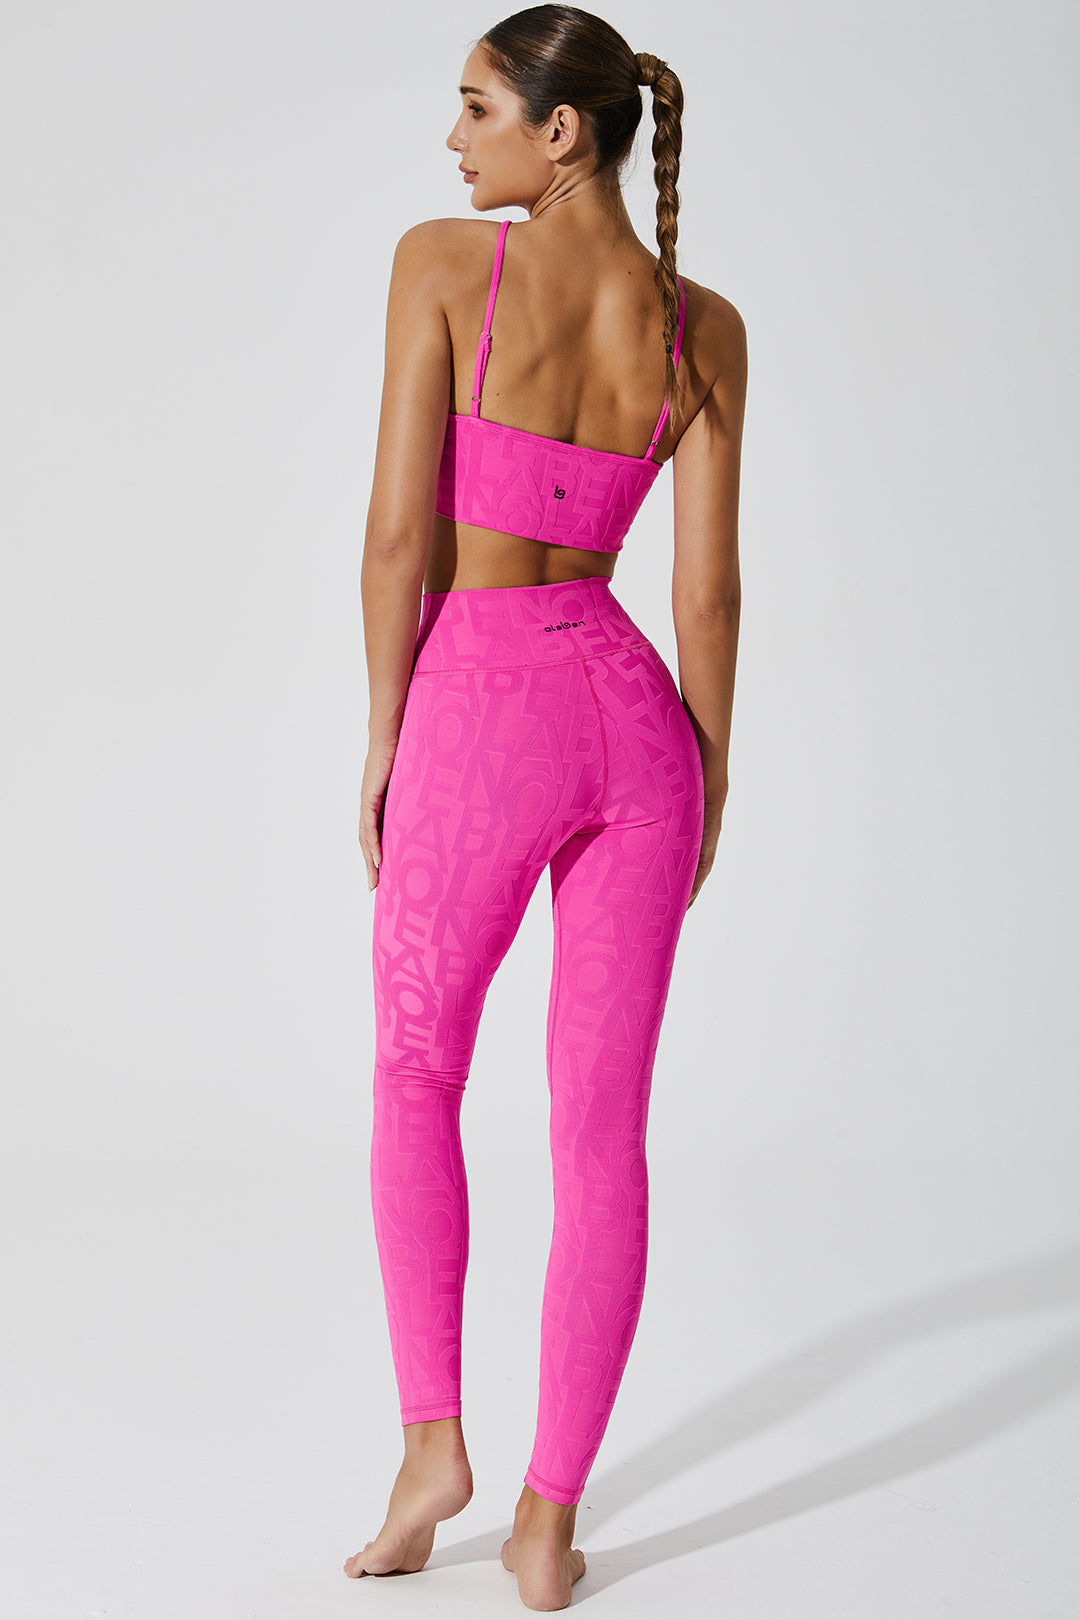 Women's dark purple pink Lumiere Bra 3D, a stylish and comfortable undergarment.